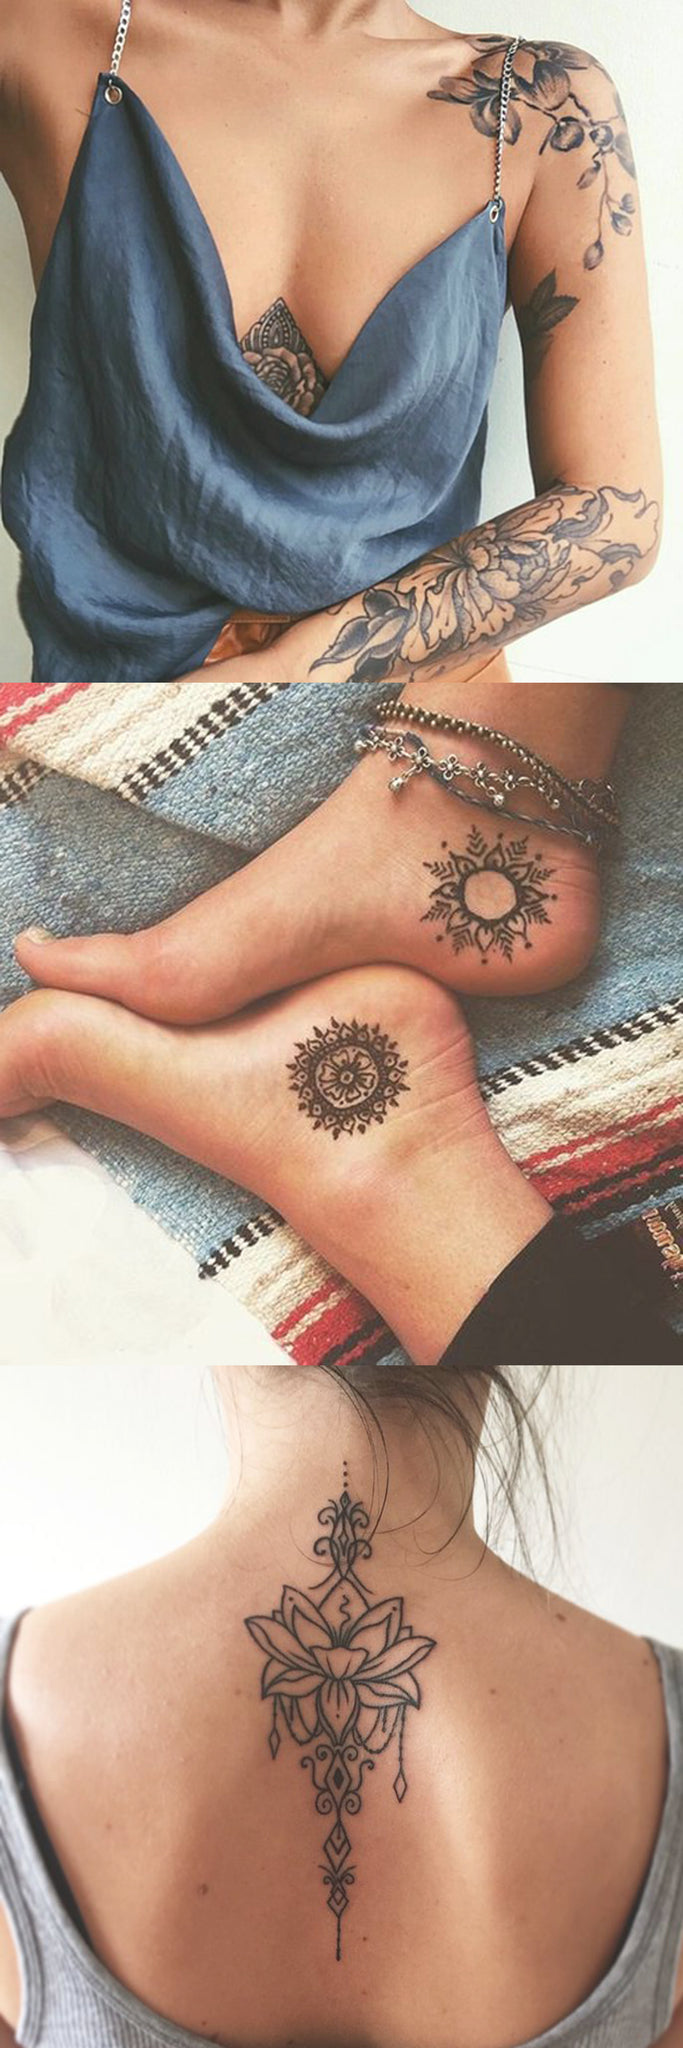 Mandala Tattoo Placement Ideas - Spine Lotus Tatt - Small Foot Ankle Sun moon Tat - Shoulder Blade Floral Flower Tatouage - MyBodiArt.com